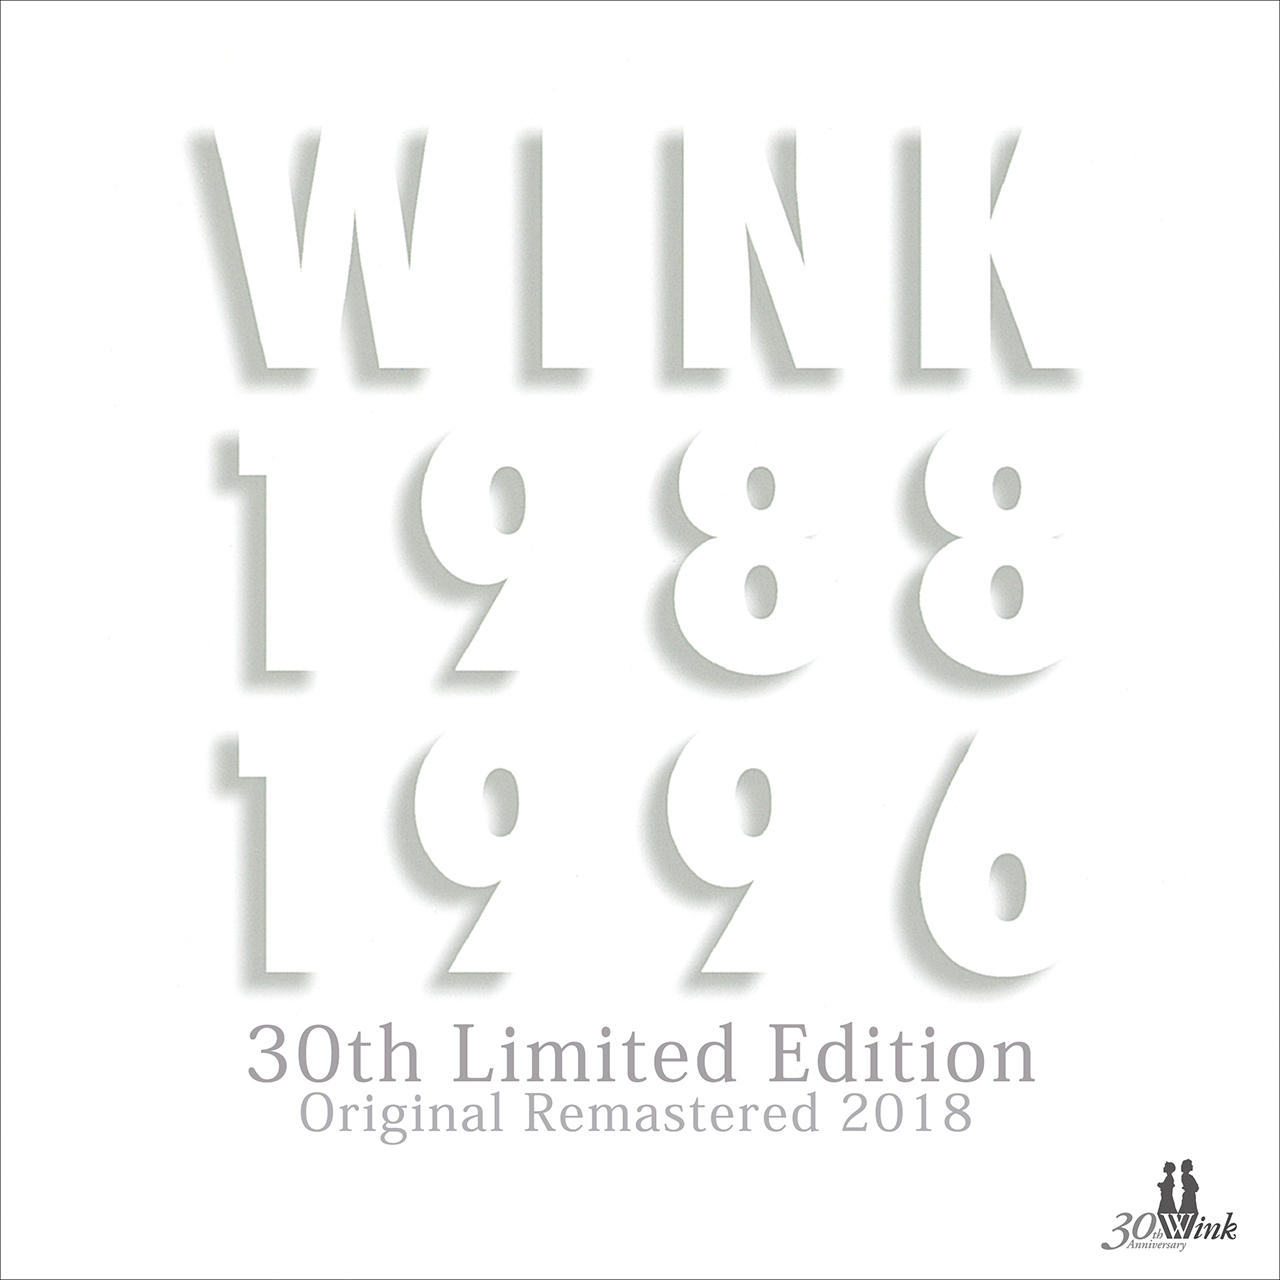 Winkデビュー30周年 全シングル25曲 Aのベスト盤 全カップリング集をデジタルリリース Musicman